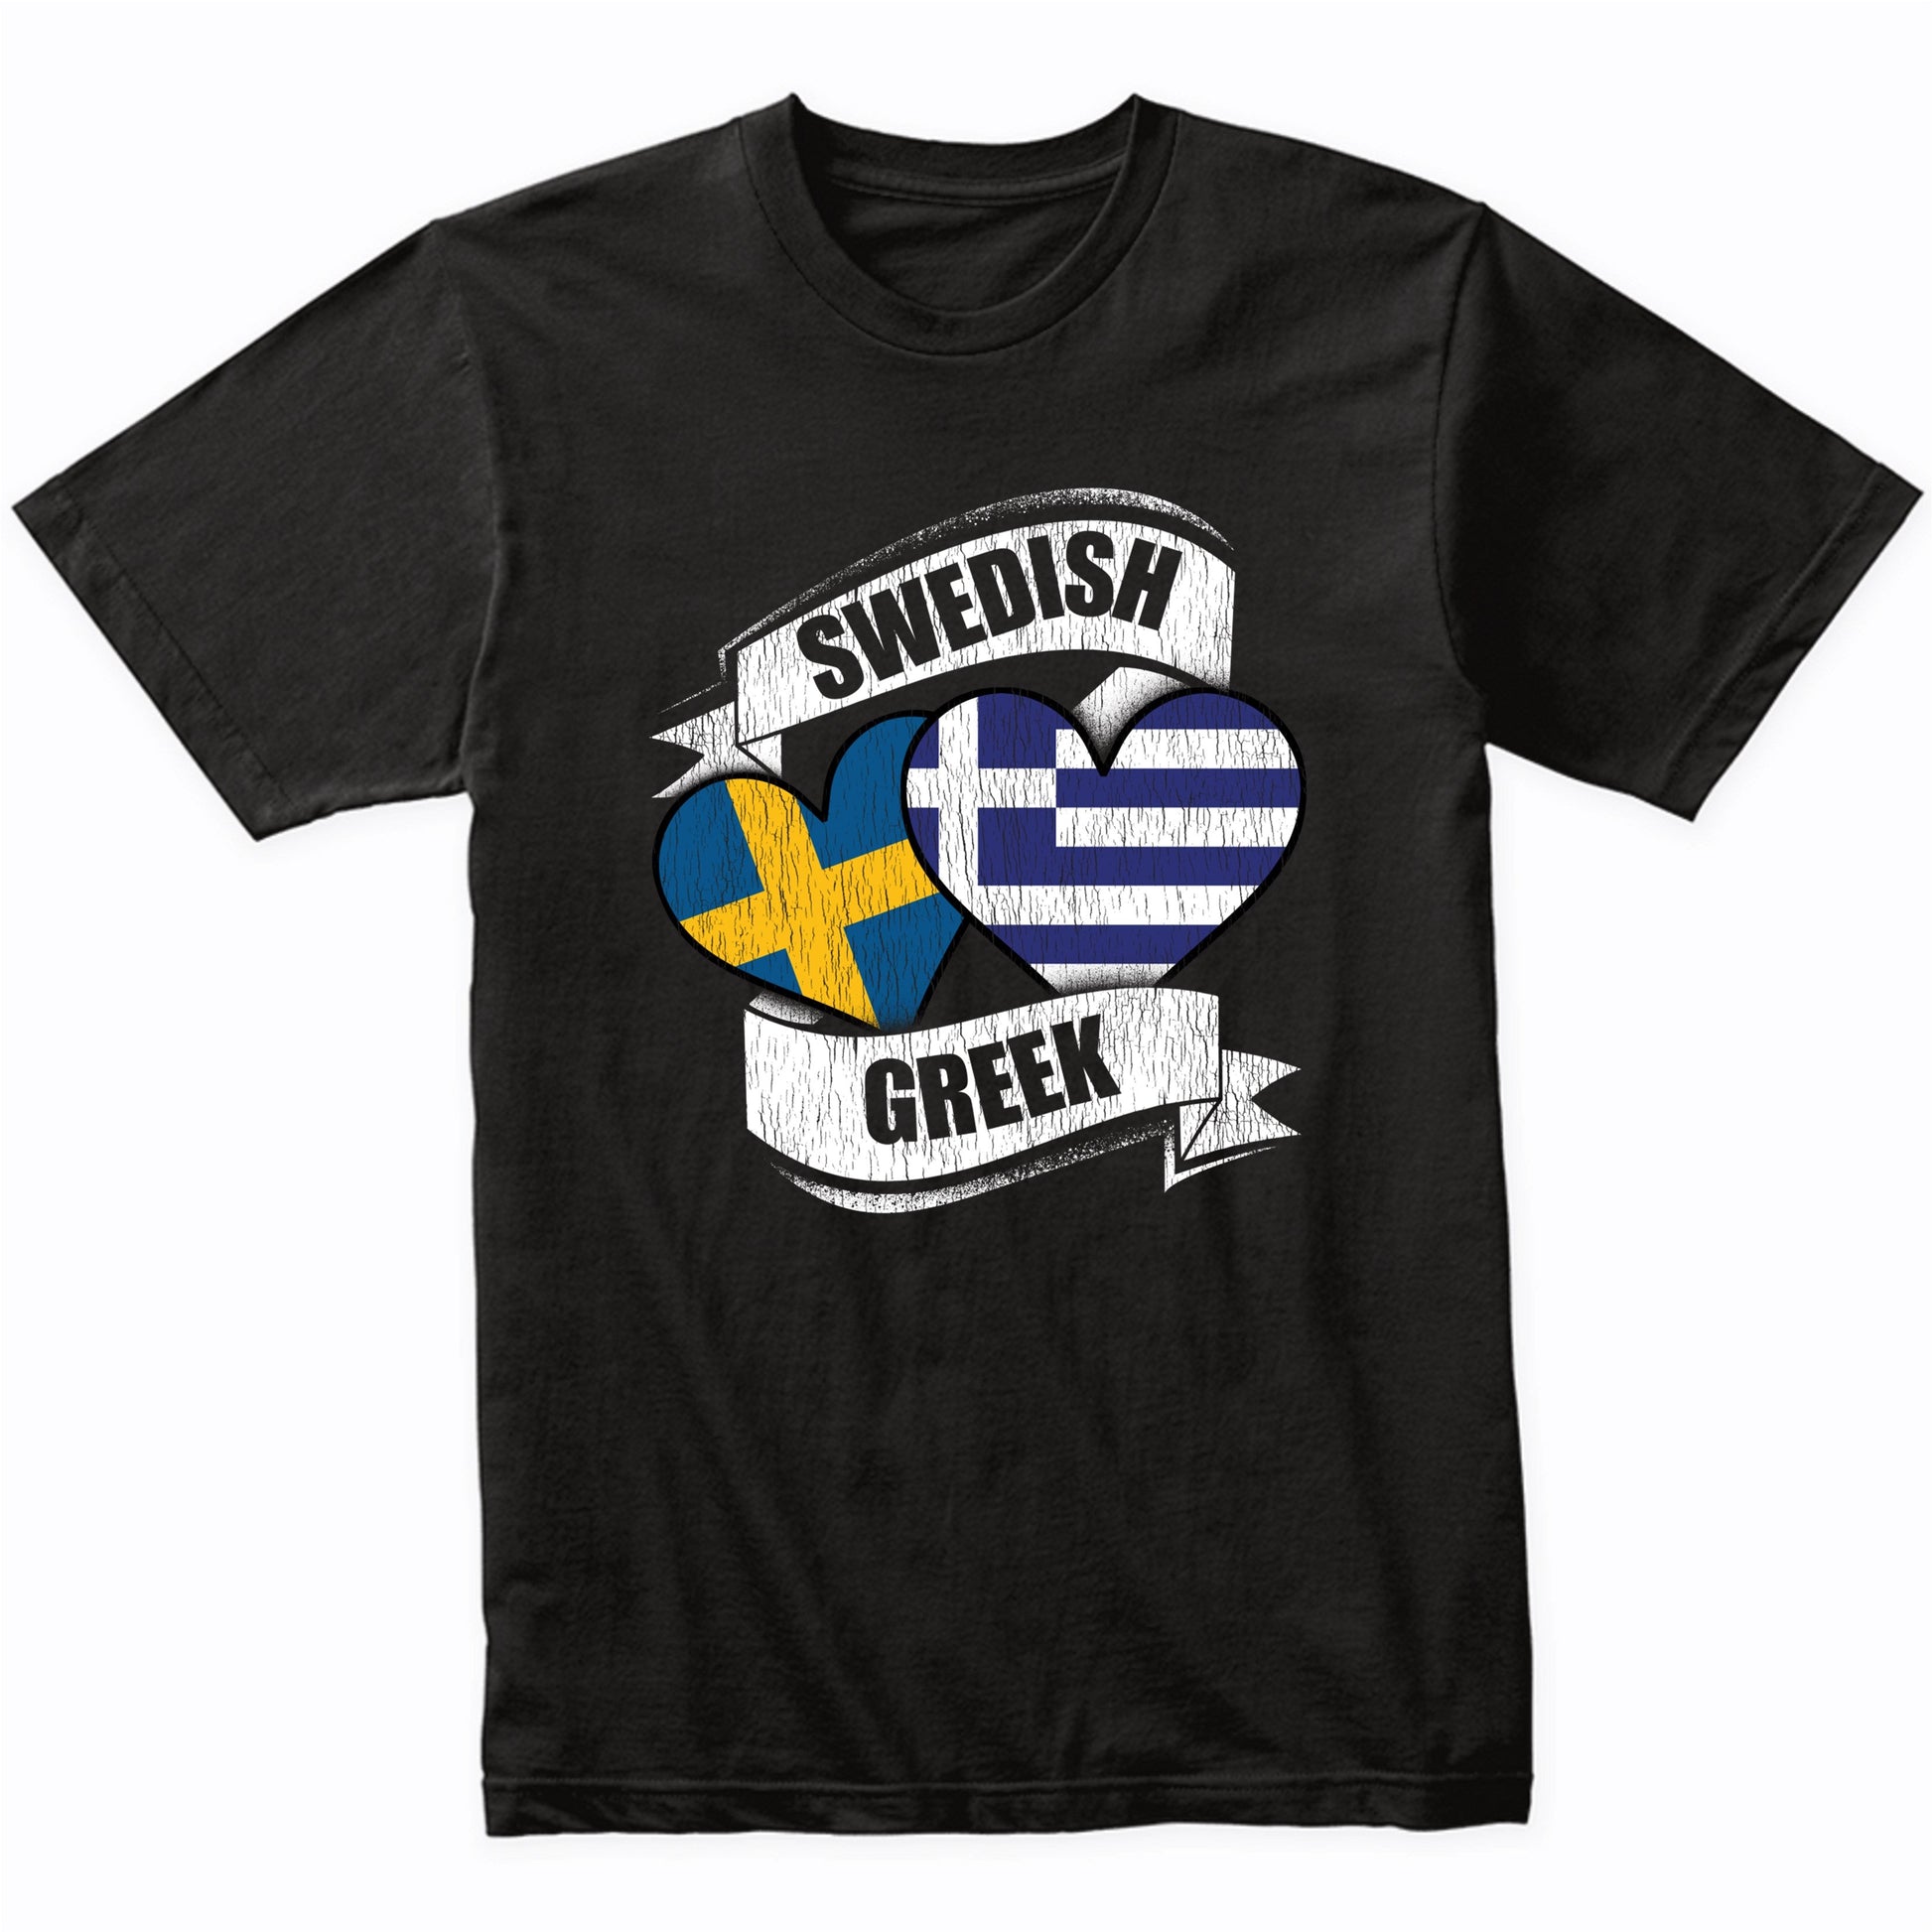 Swedish Greek Hearts Sweden Greece Flags T-Shirt